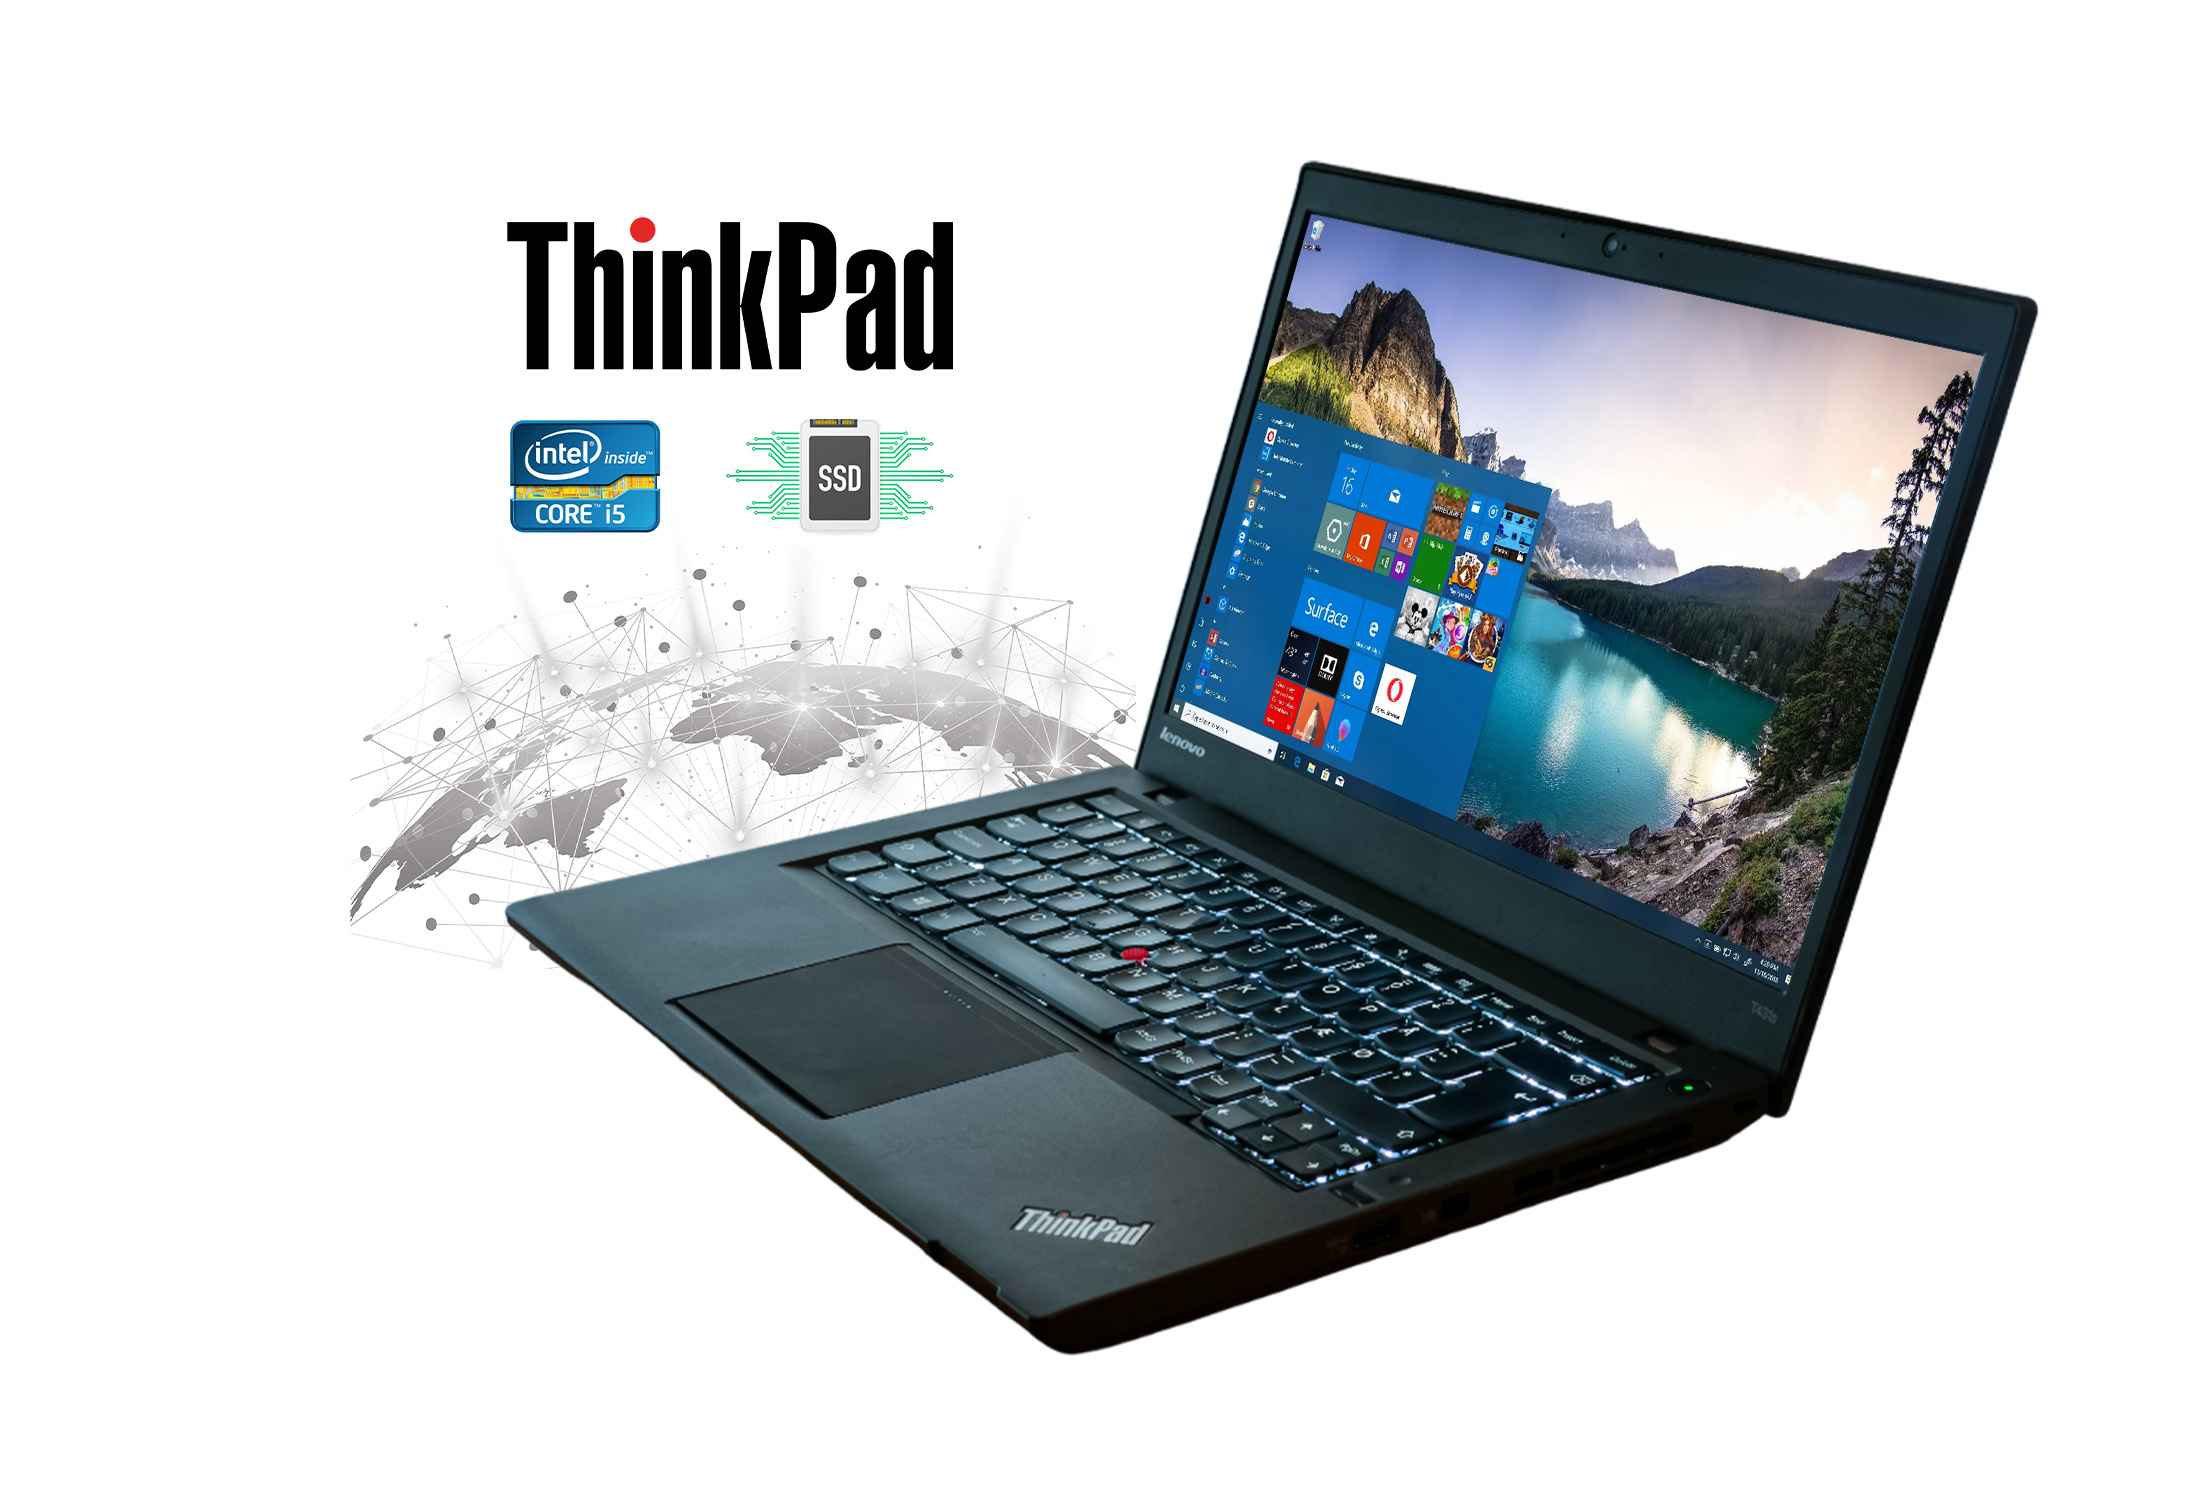 Lenovo Thinkpad T431s i5-3437U 8GB RAM SSD 1600x900 Camera